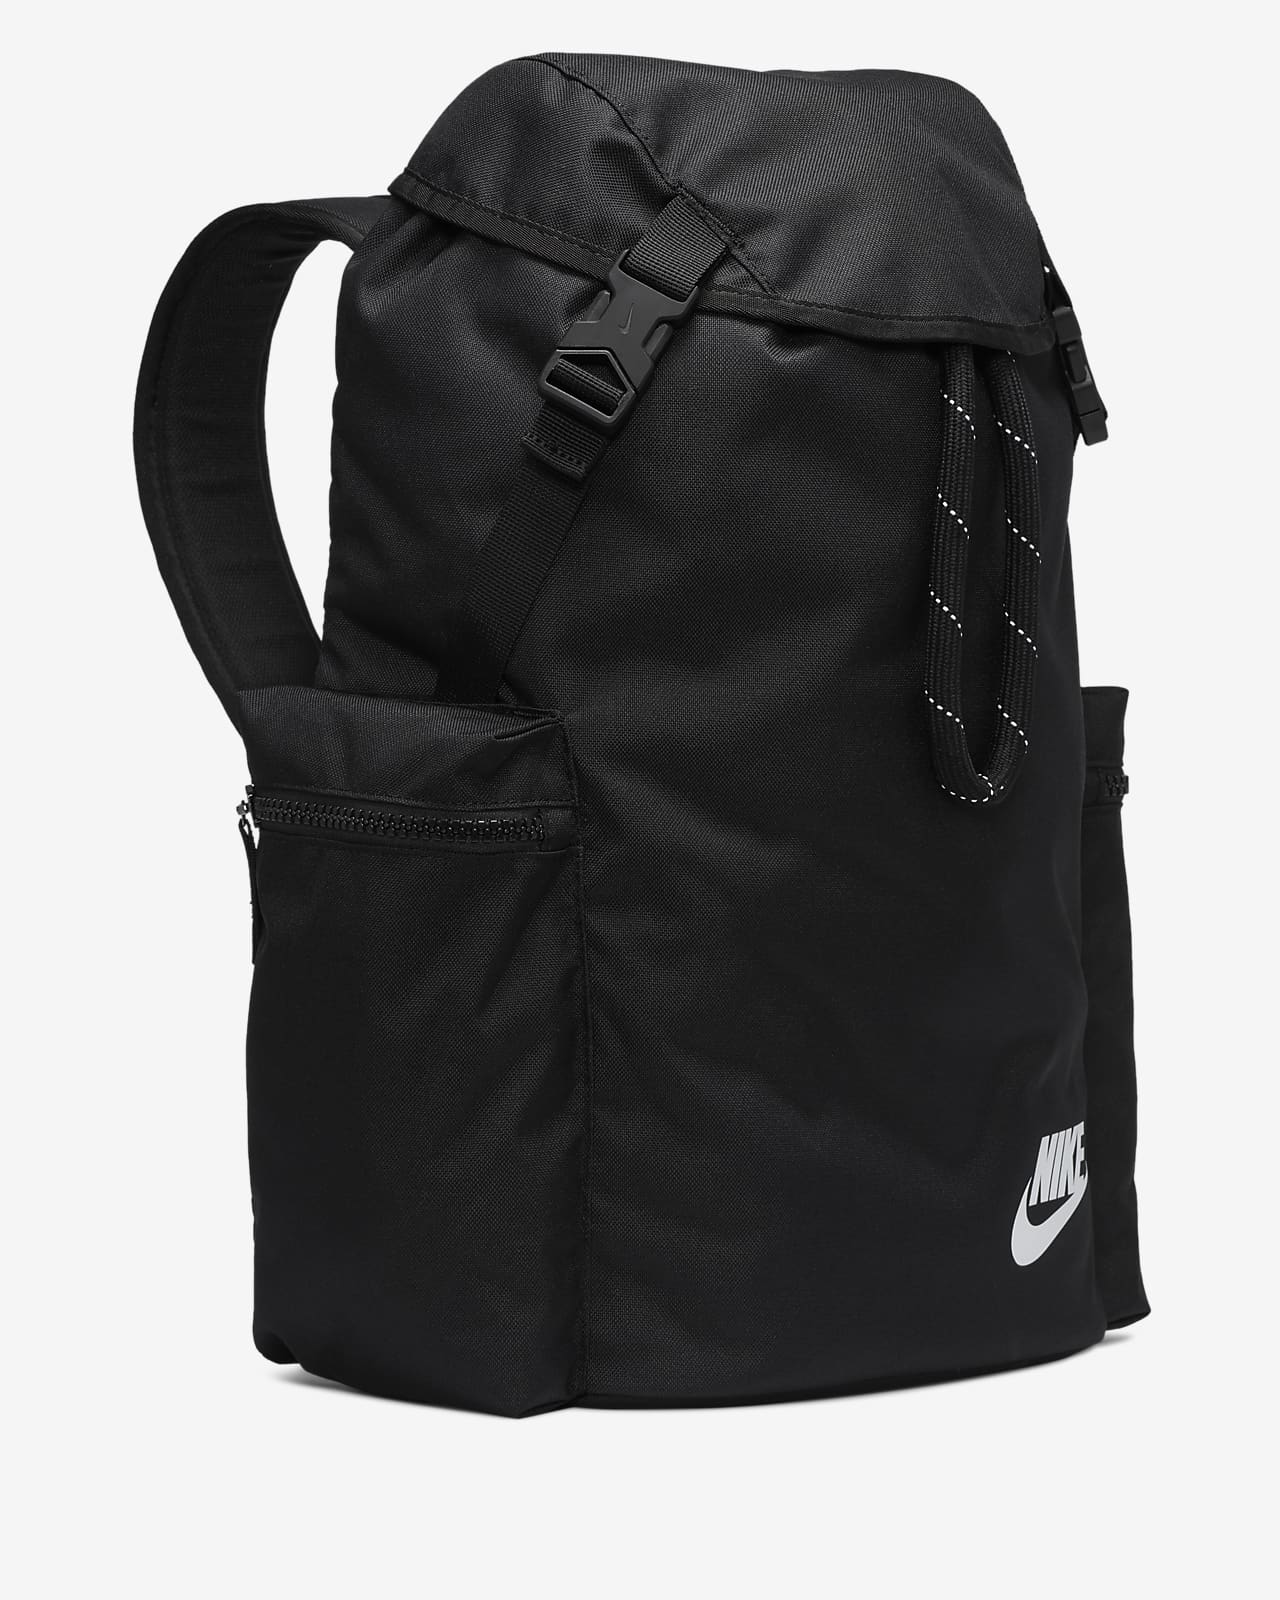 nike heritage backpack black and white